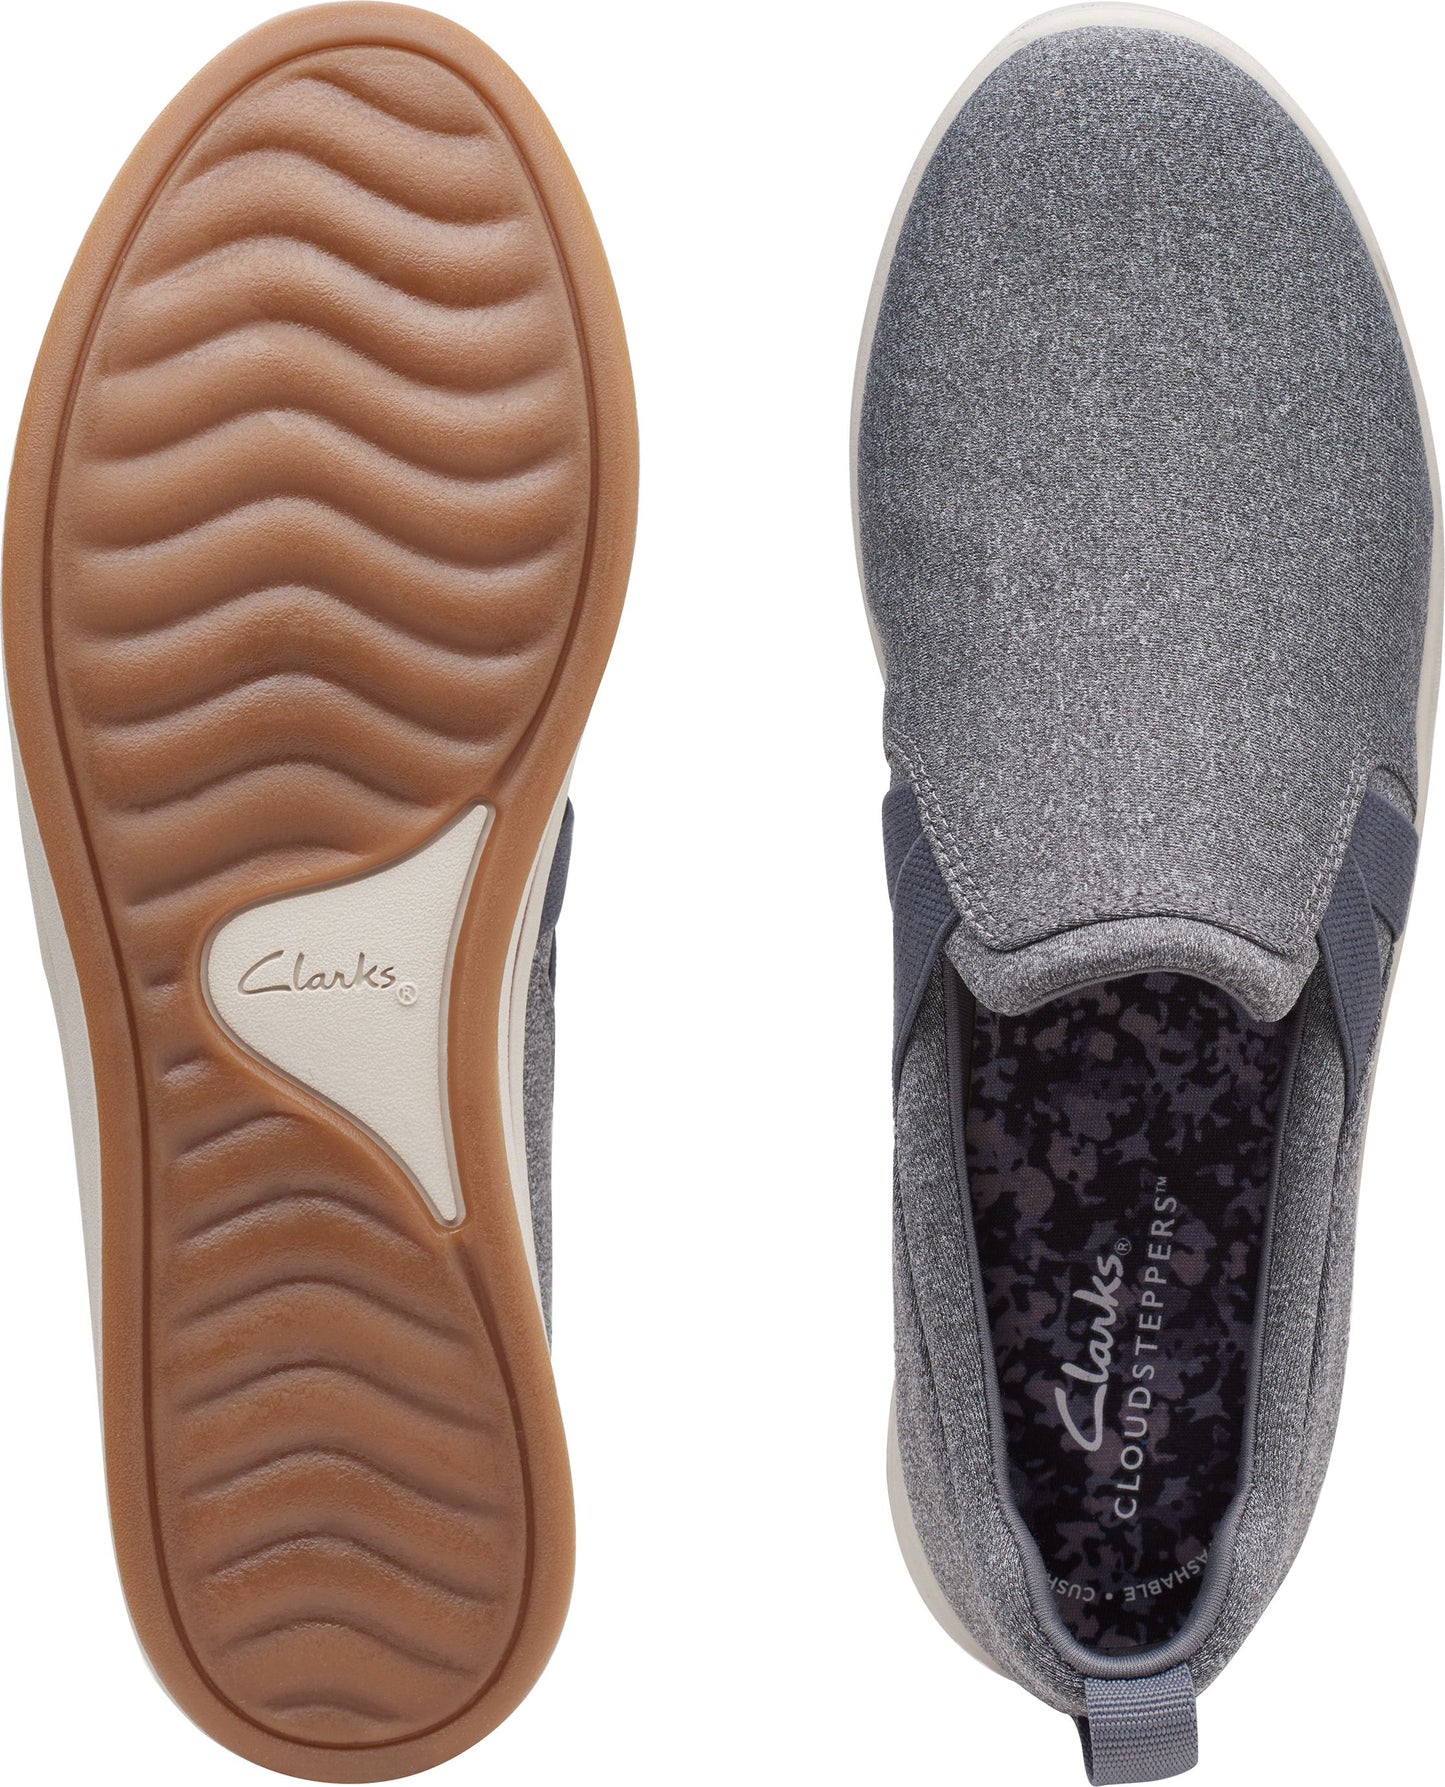 Clarks Shoes Breeze Bali Dark Grey